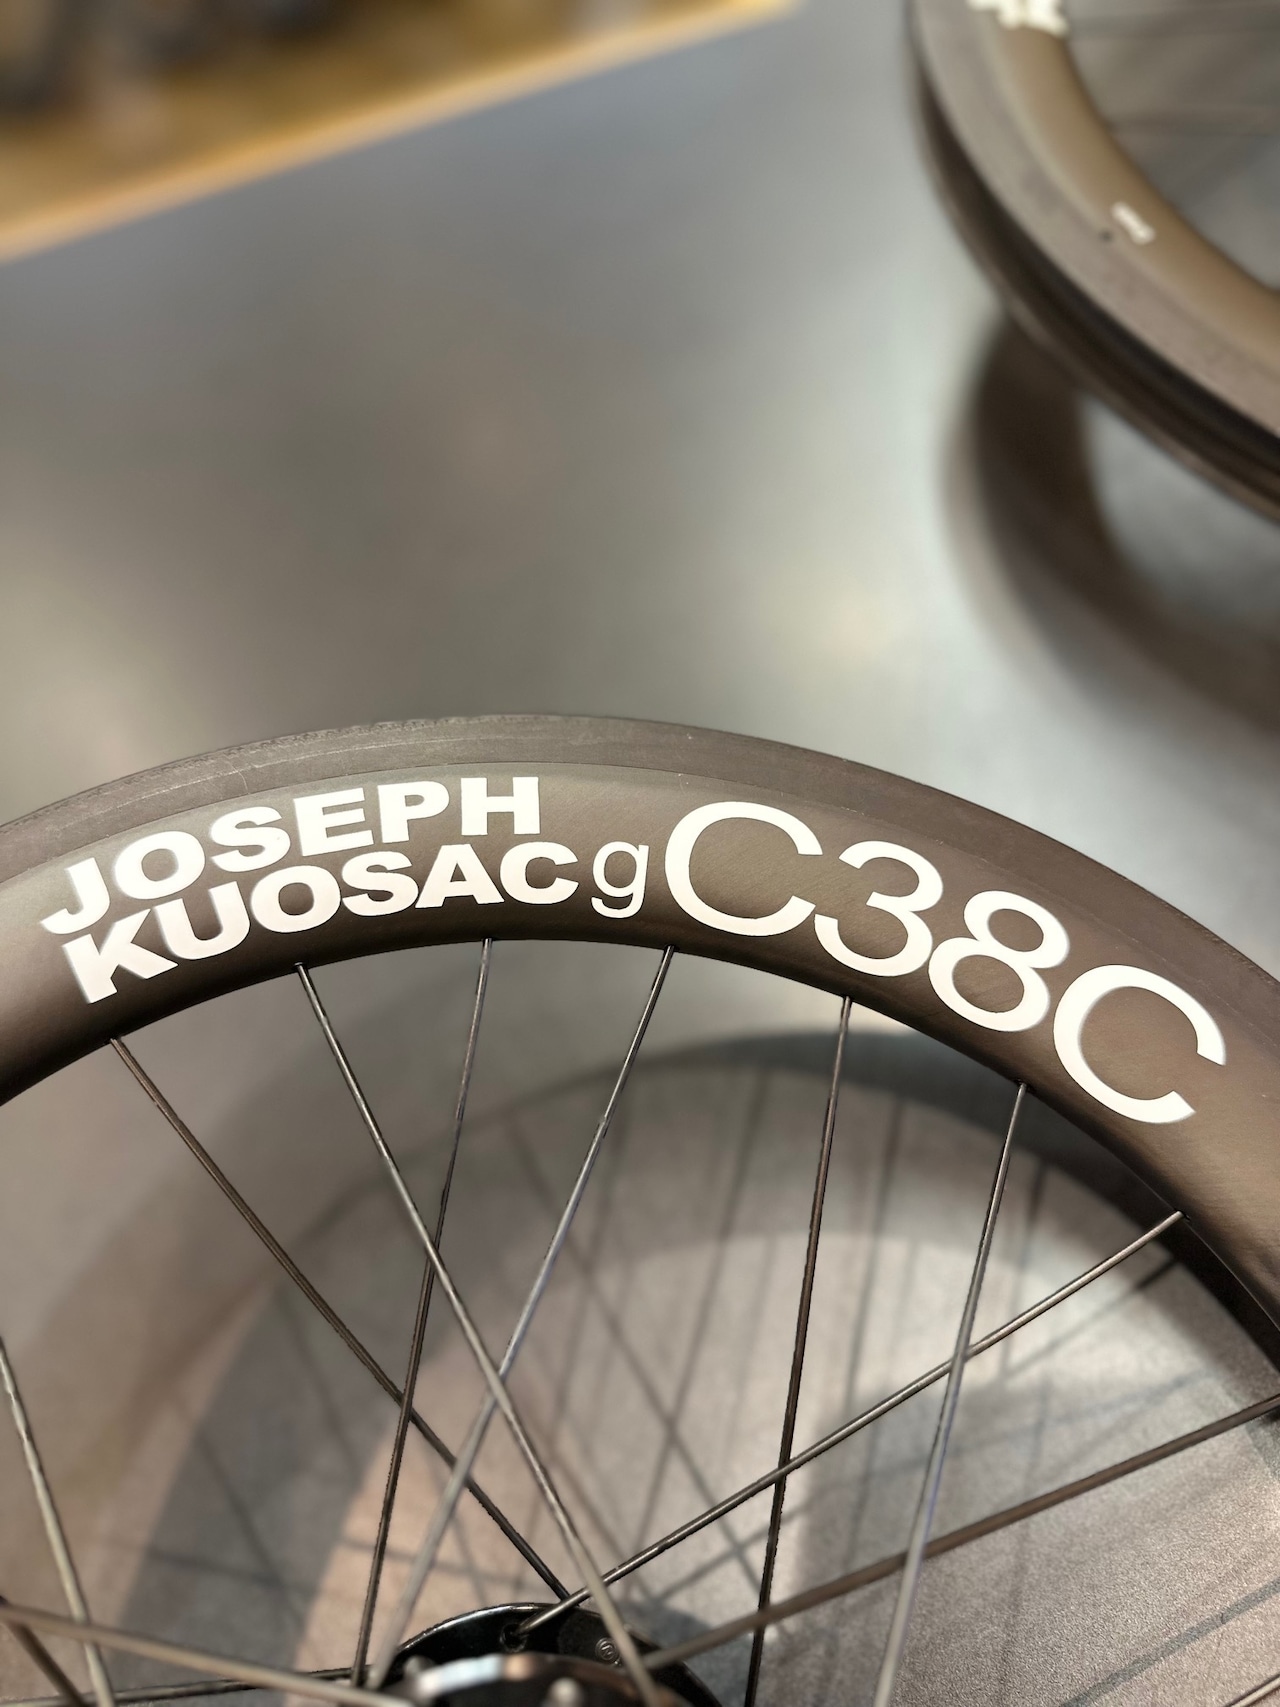 Joseph Kuosac C38 Carbon Wheelset (Brompton 6speed)